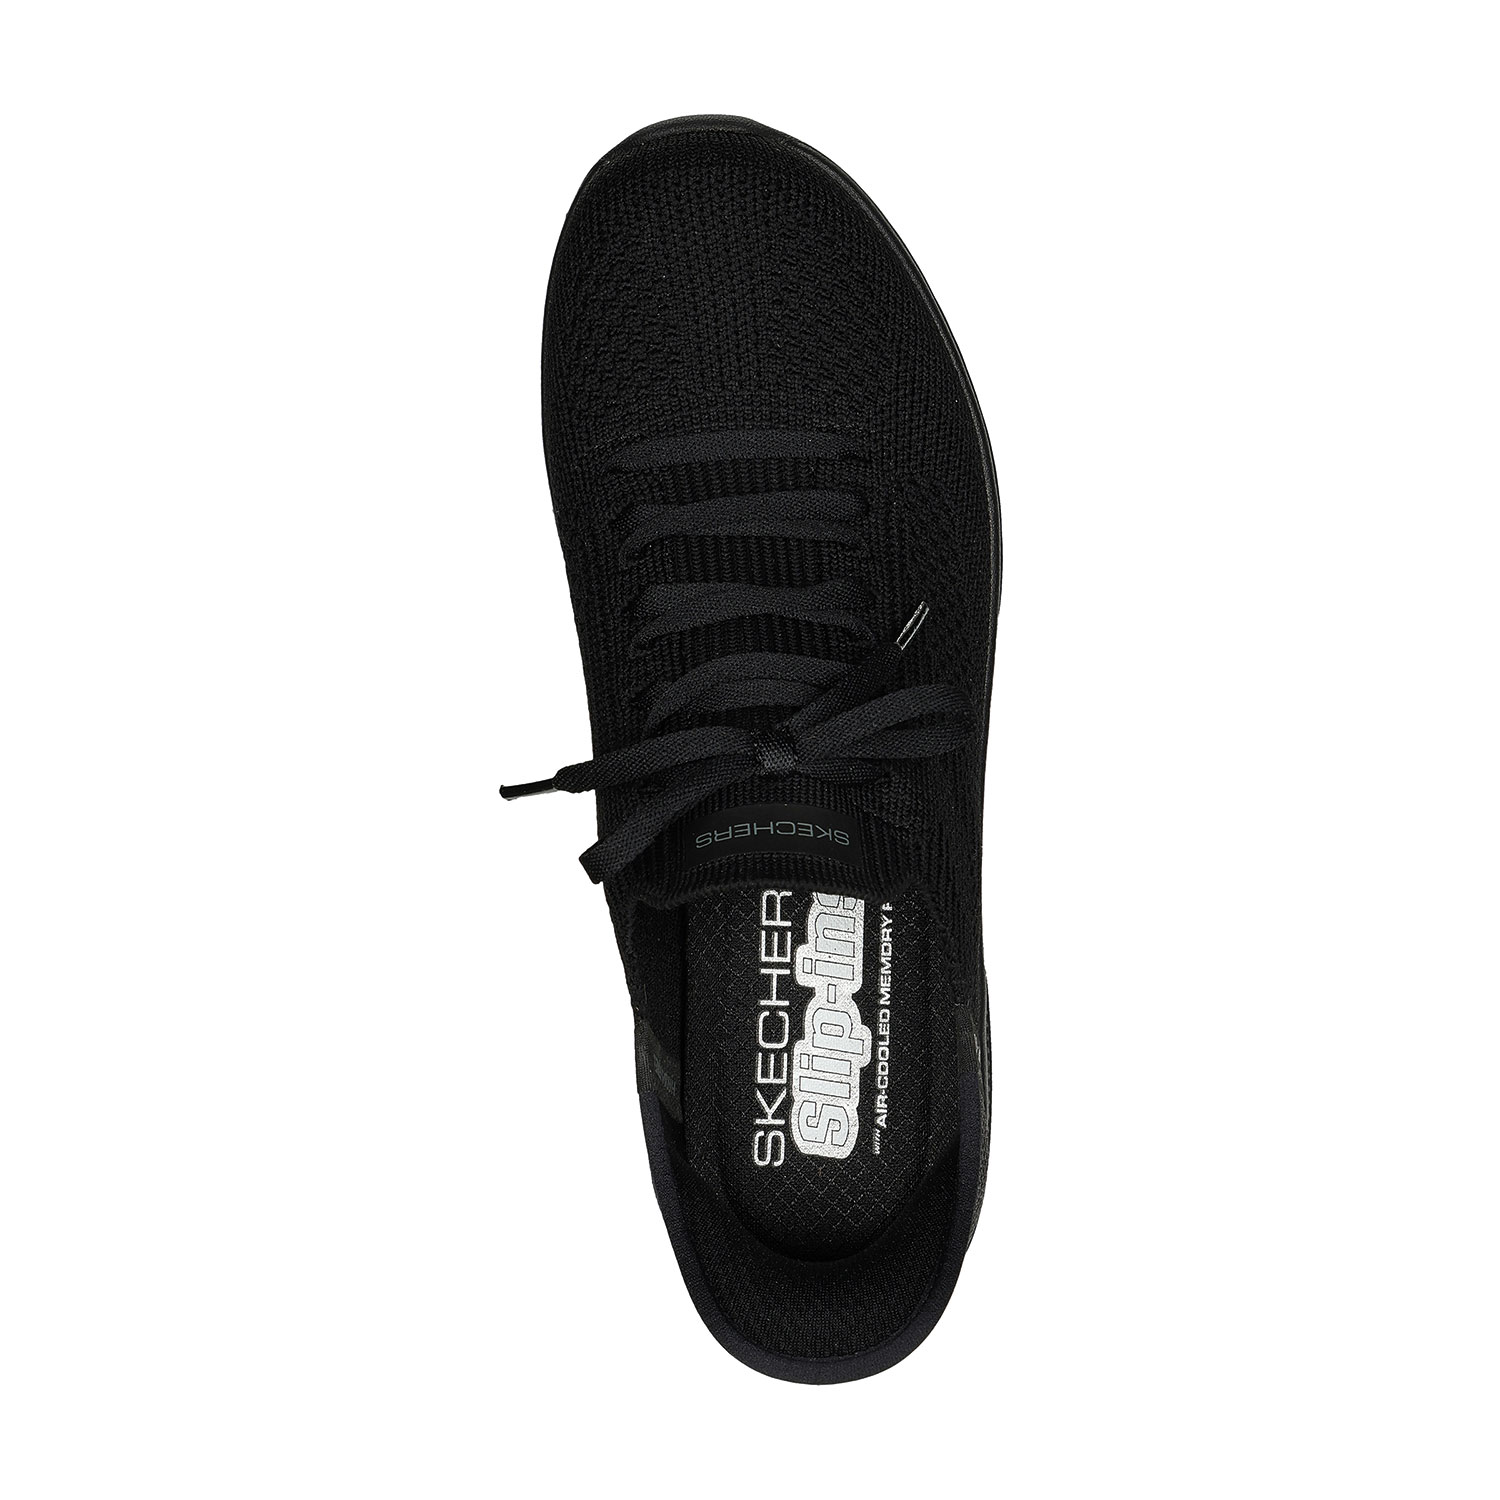 Product image for Skecher Women's Hands Free Slip-ins Virtue Sneakers - Black